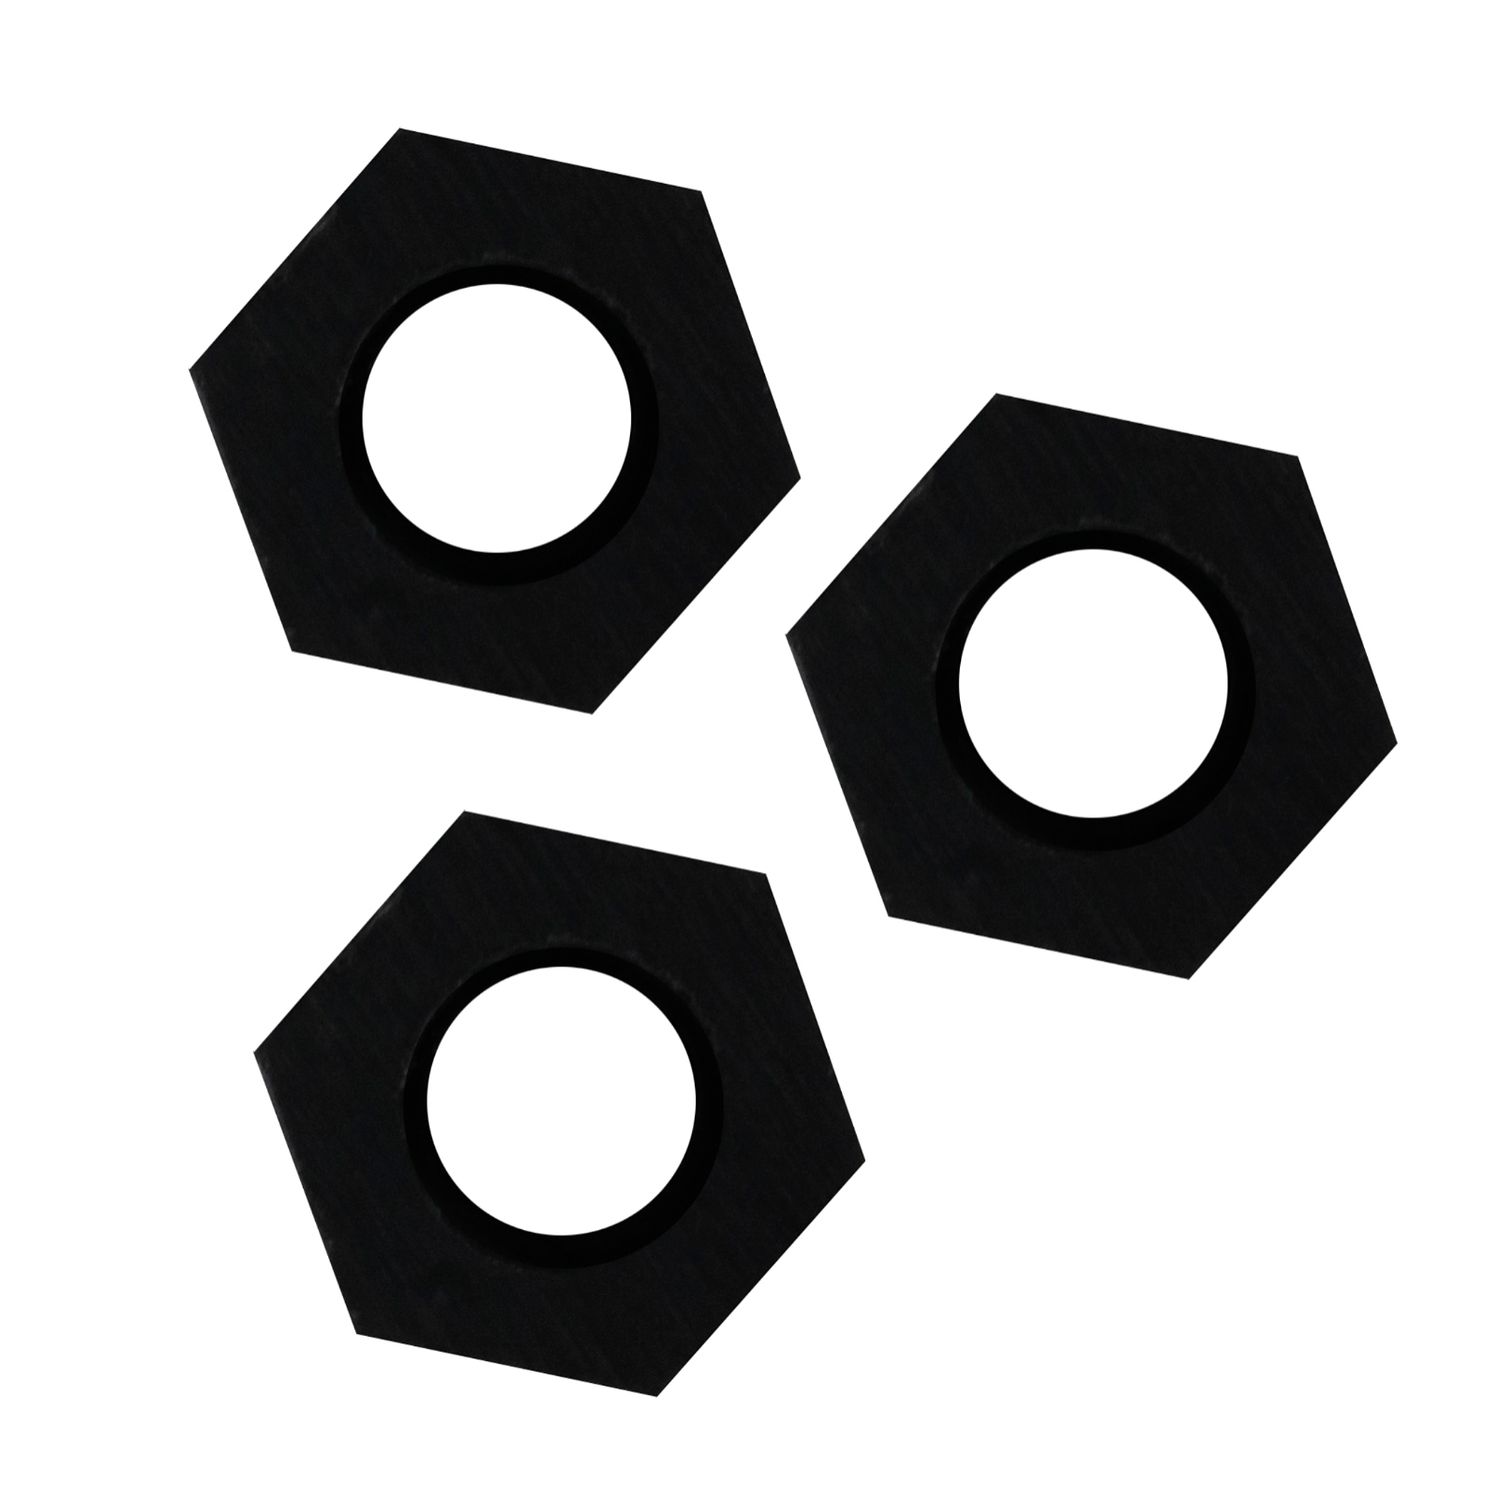 Гайка шестигранная М3 пластиковая (черная)